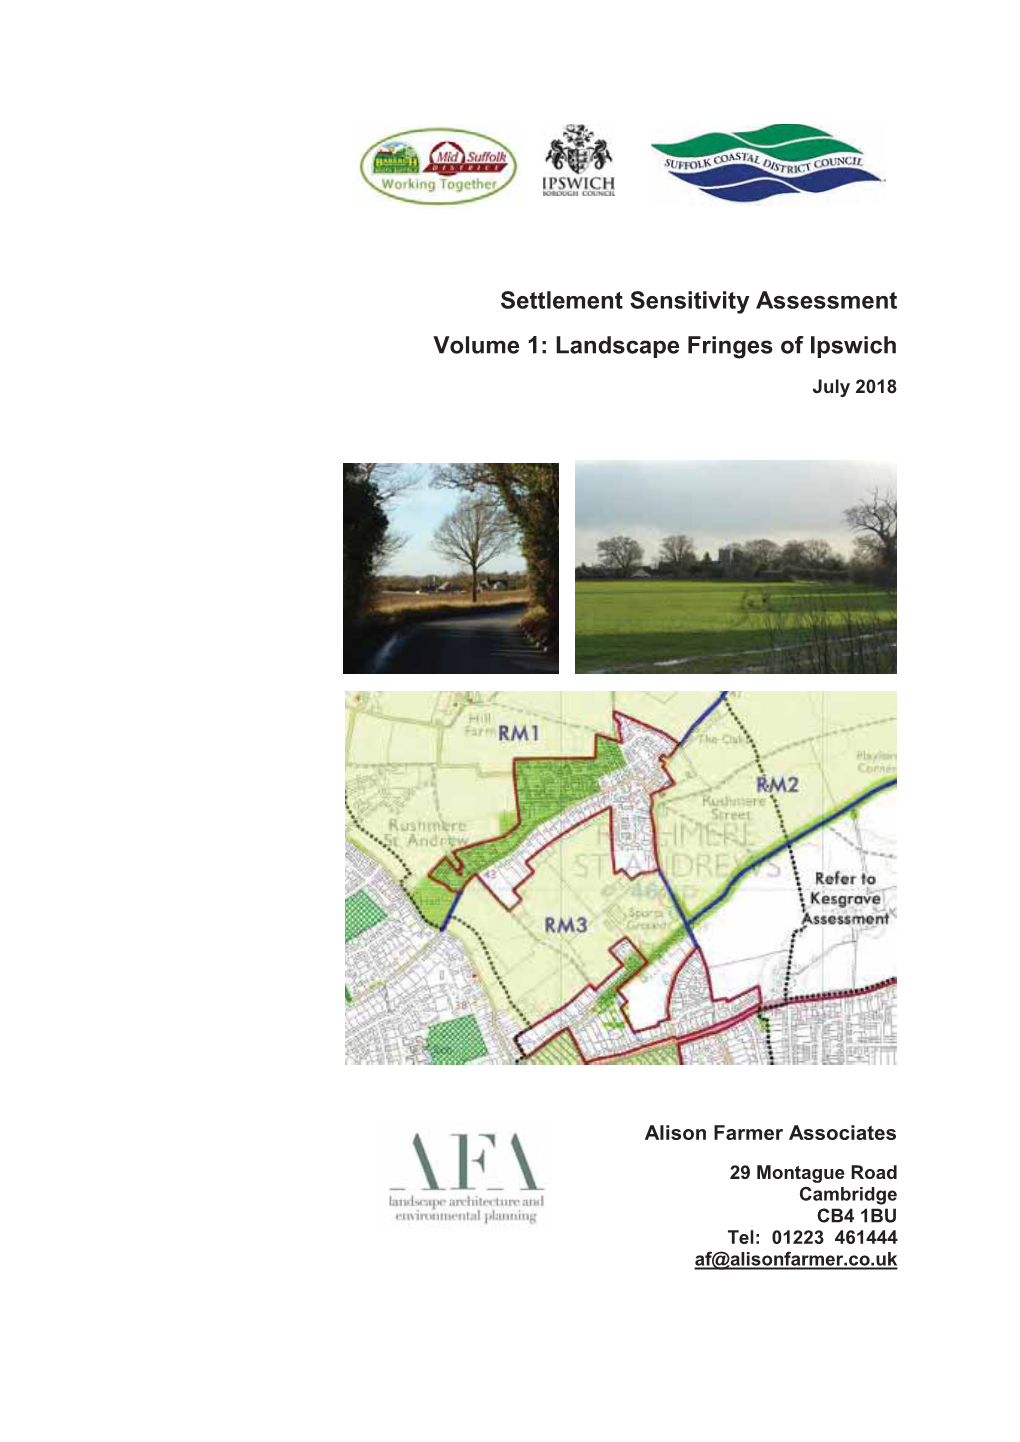 Settlement Sensitivity Assessment Volume 1: Landscape Fringes of Ipswich